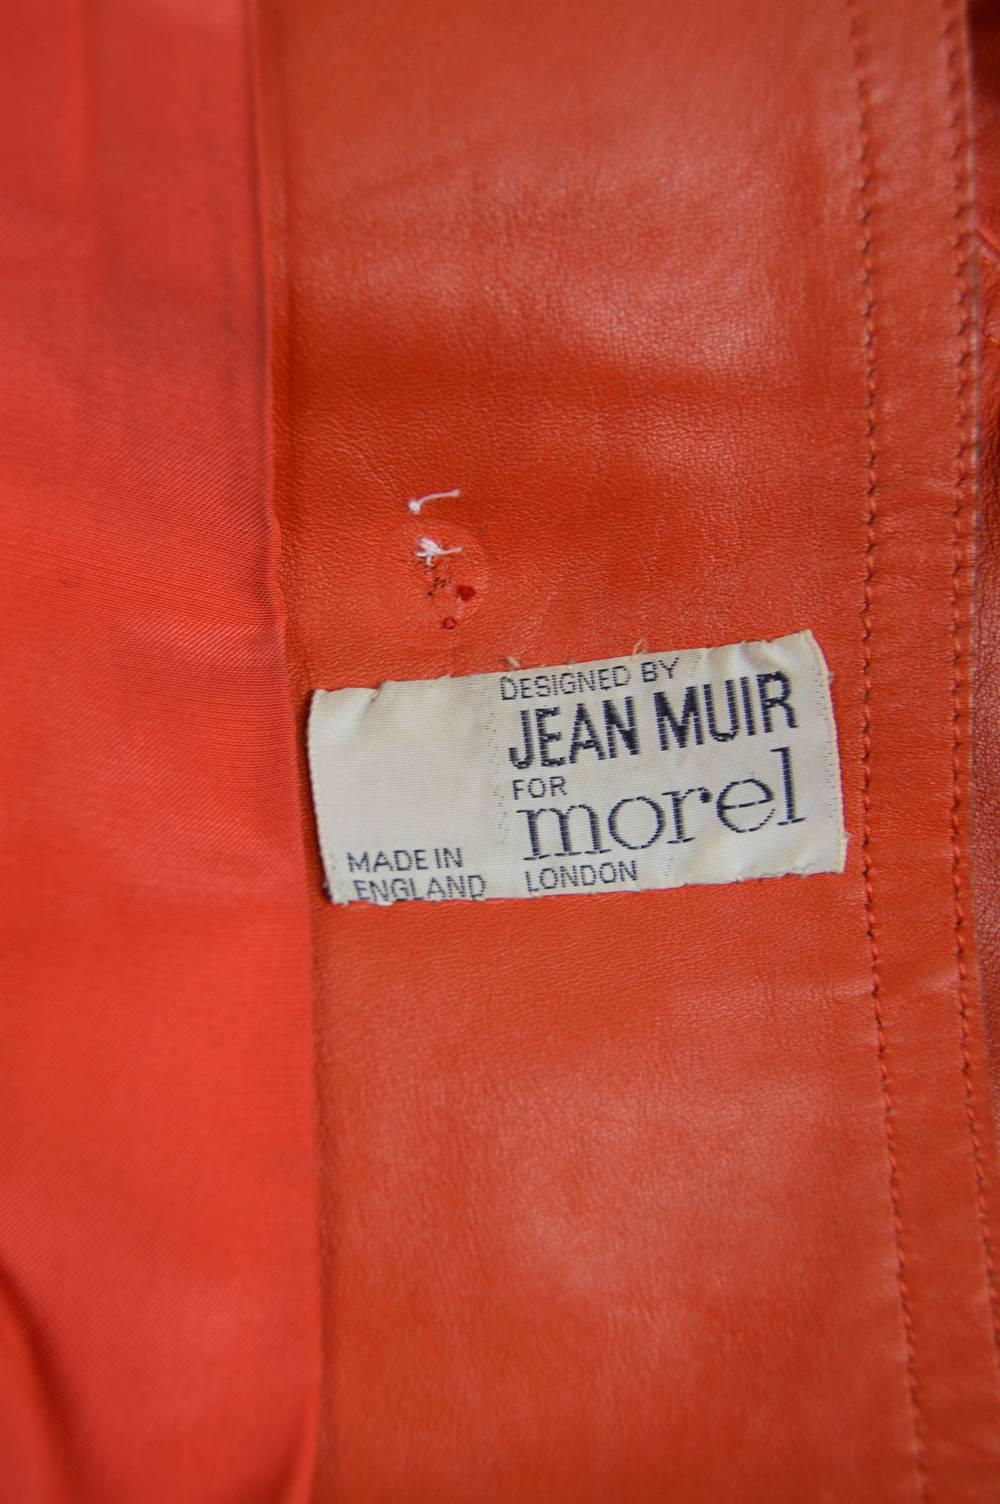 Vintage 1970s Jean Muir Red Leather Belted A-Line Dress for Morel London 3